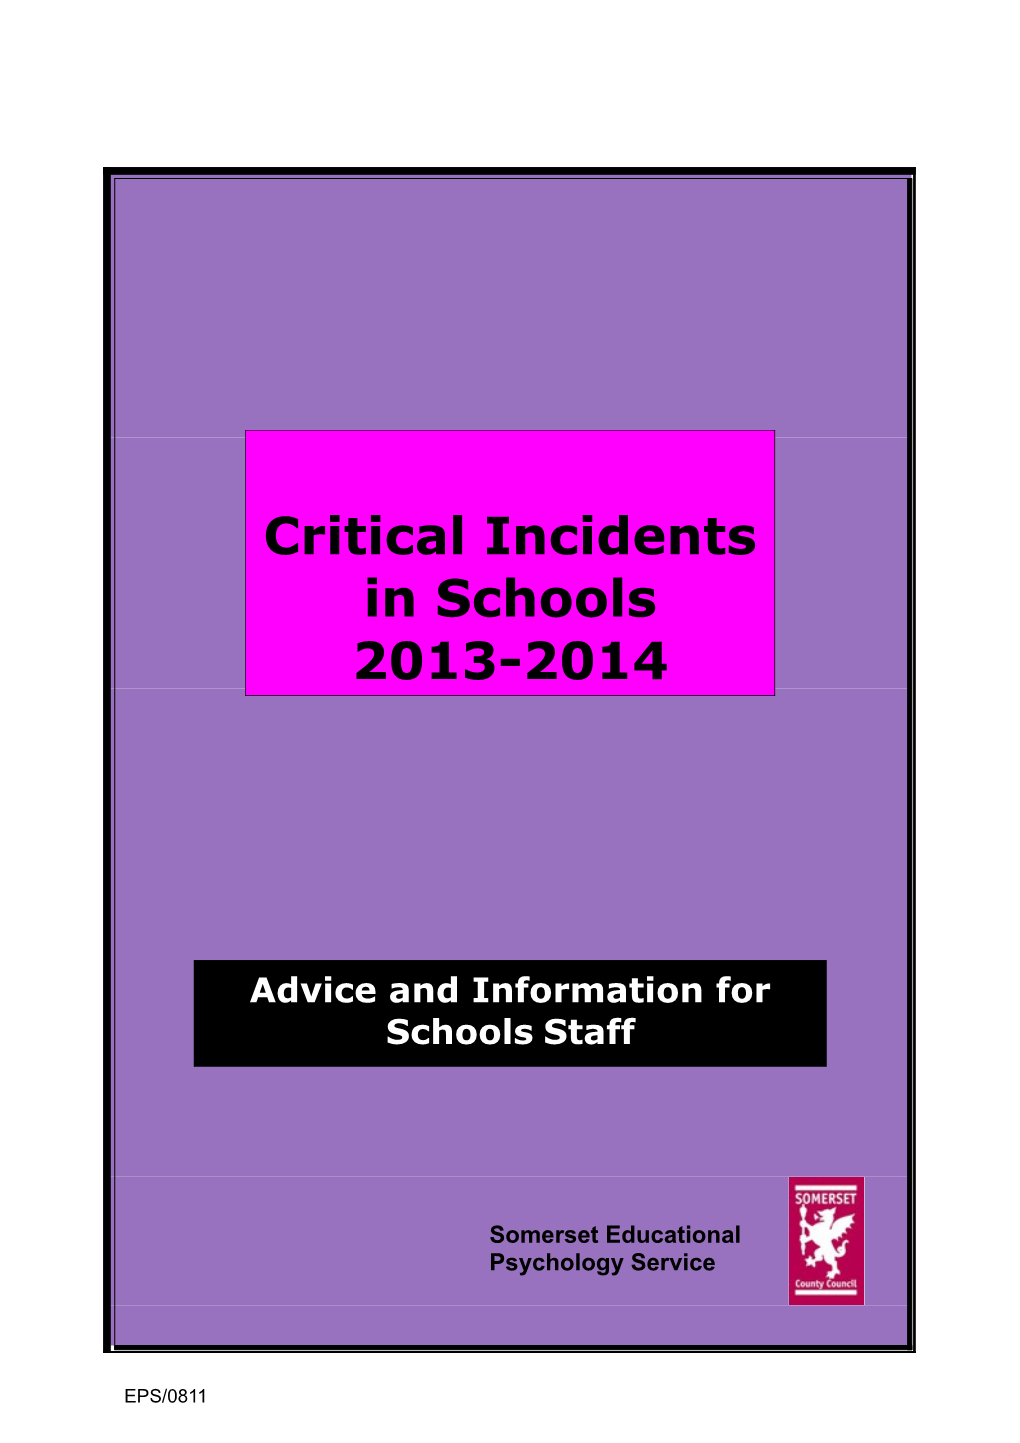 Critical Incidents in Schools